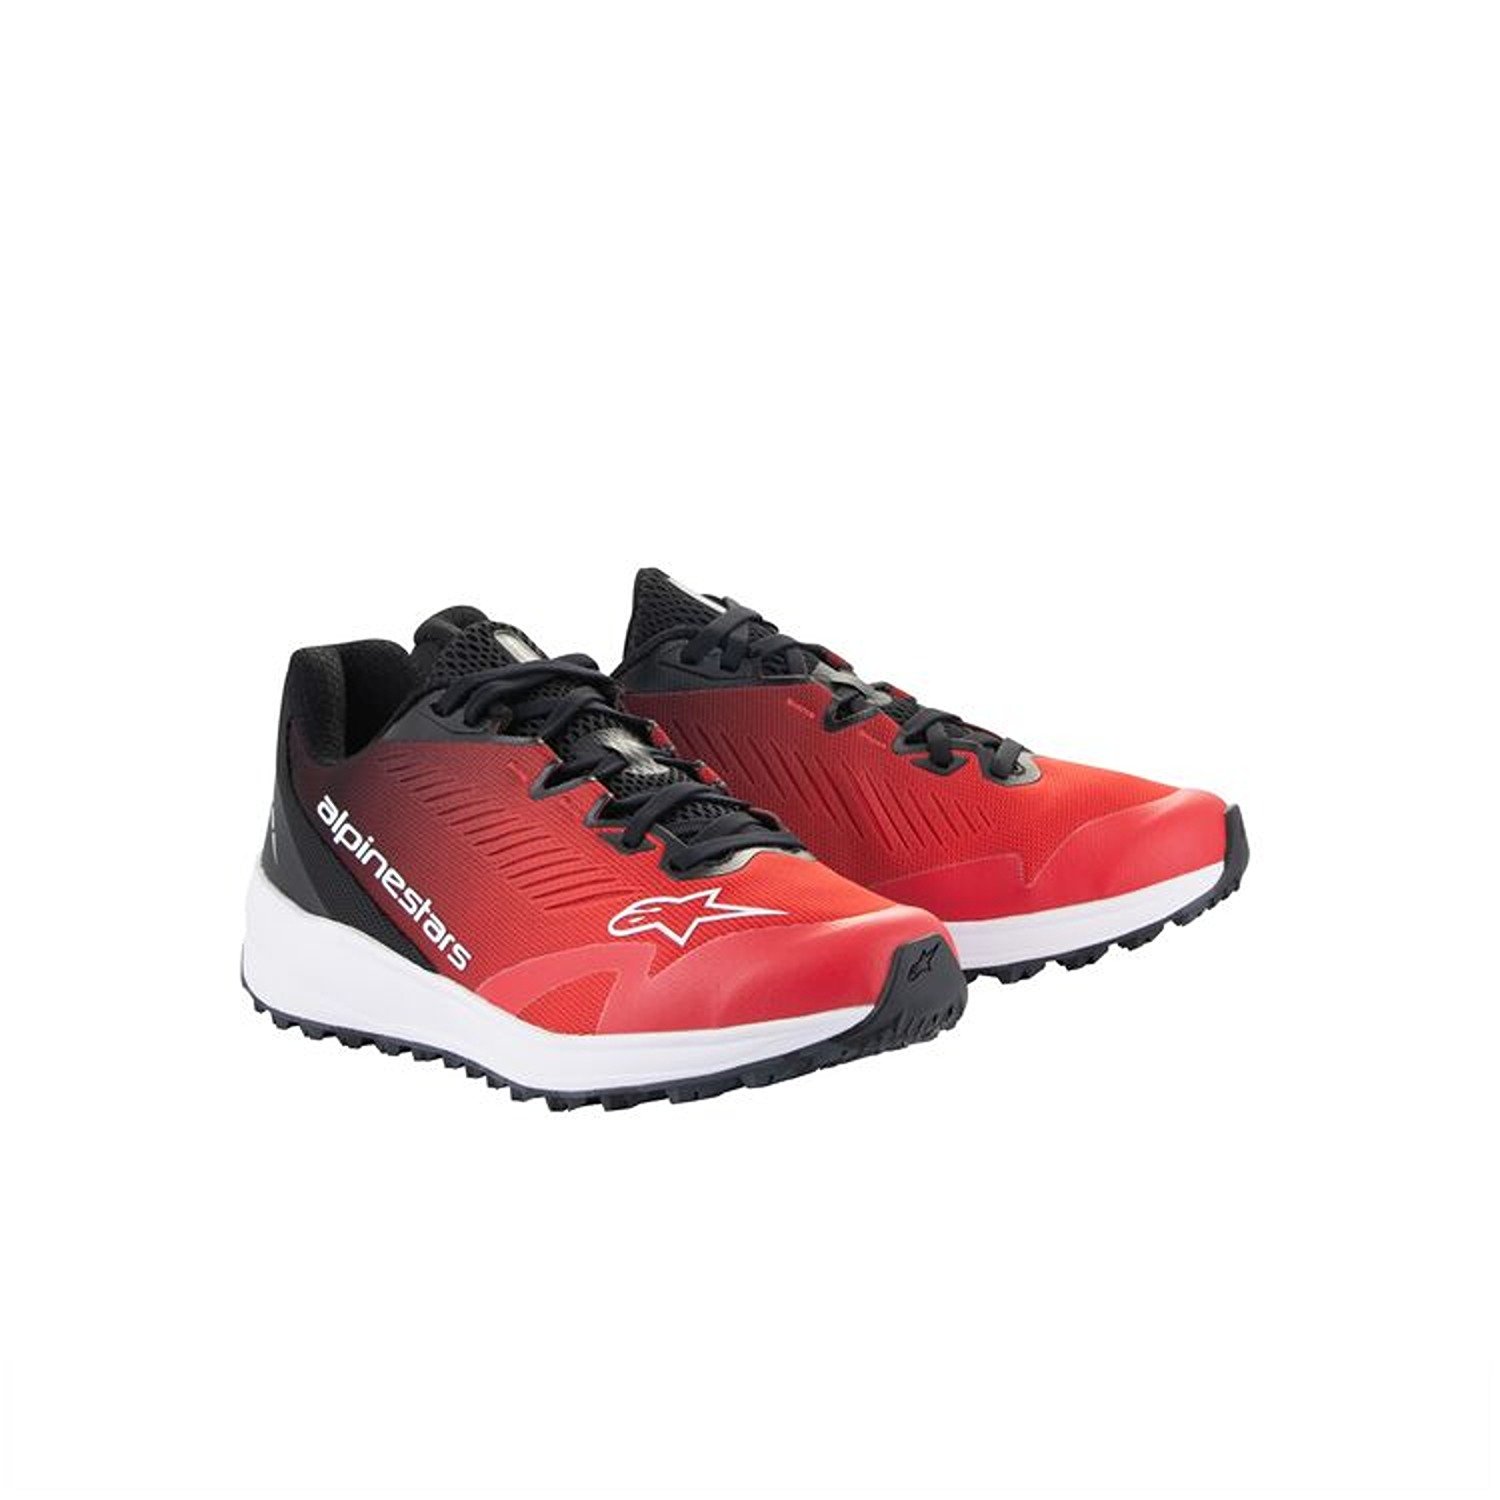 Image of Alpinestars Meta Road V2 Shoes Red Black White Size US 55 ID 8059347383088